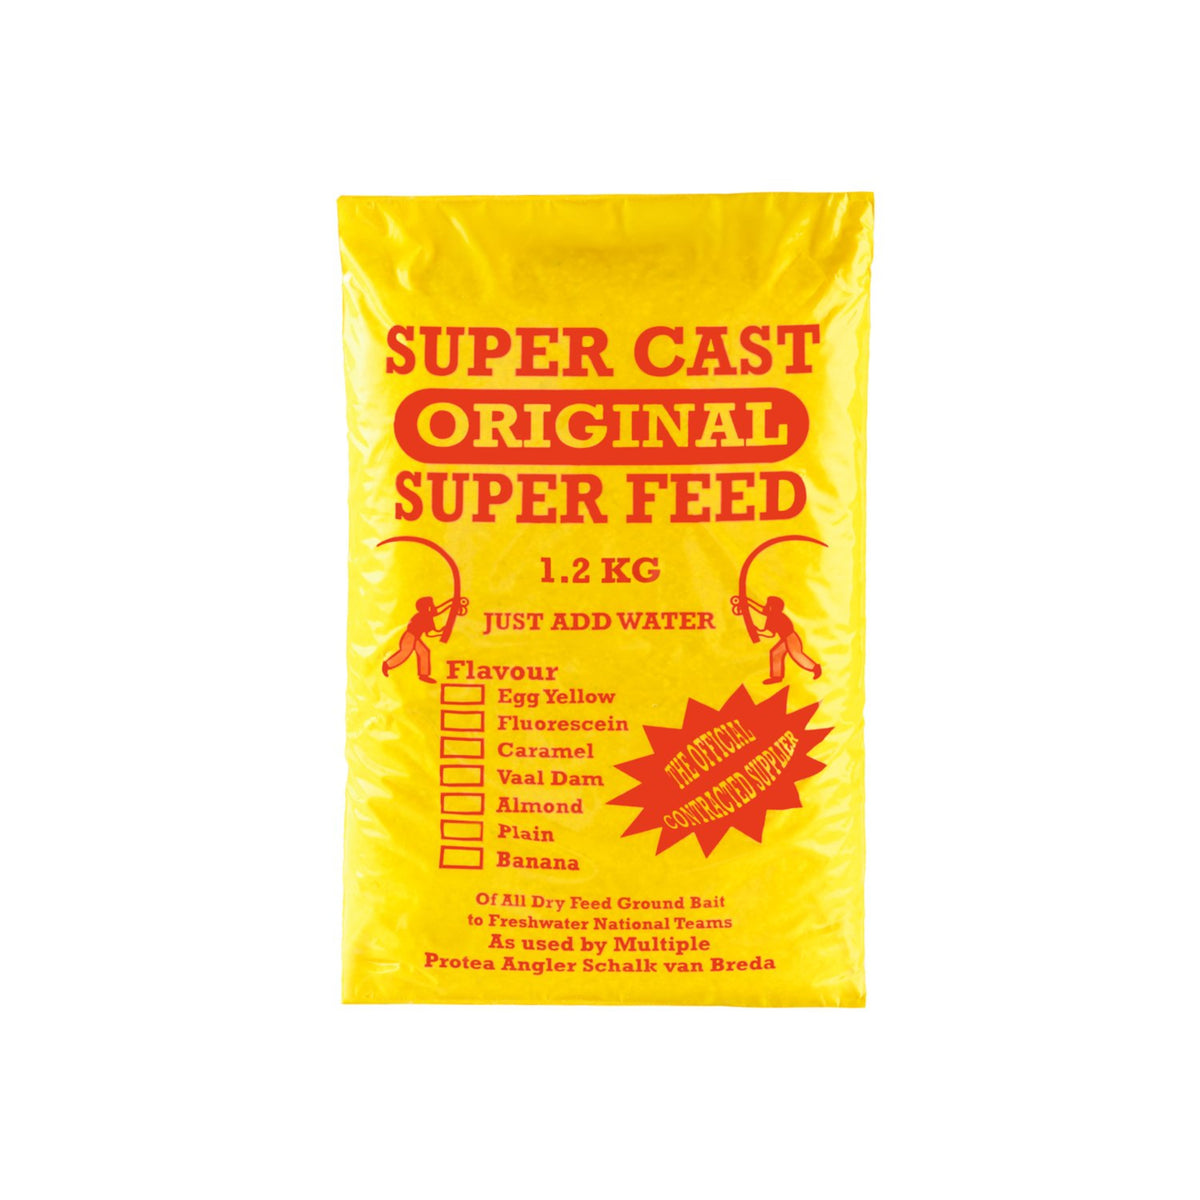 Super Cast Original Super Feed